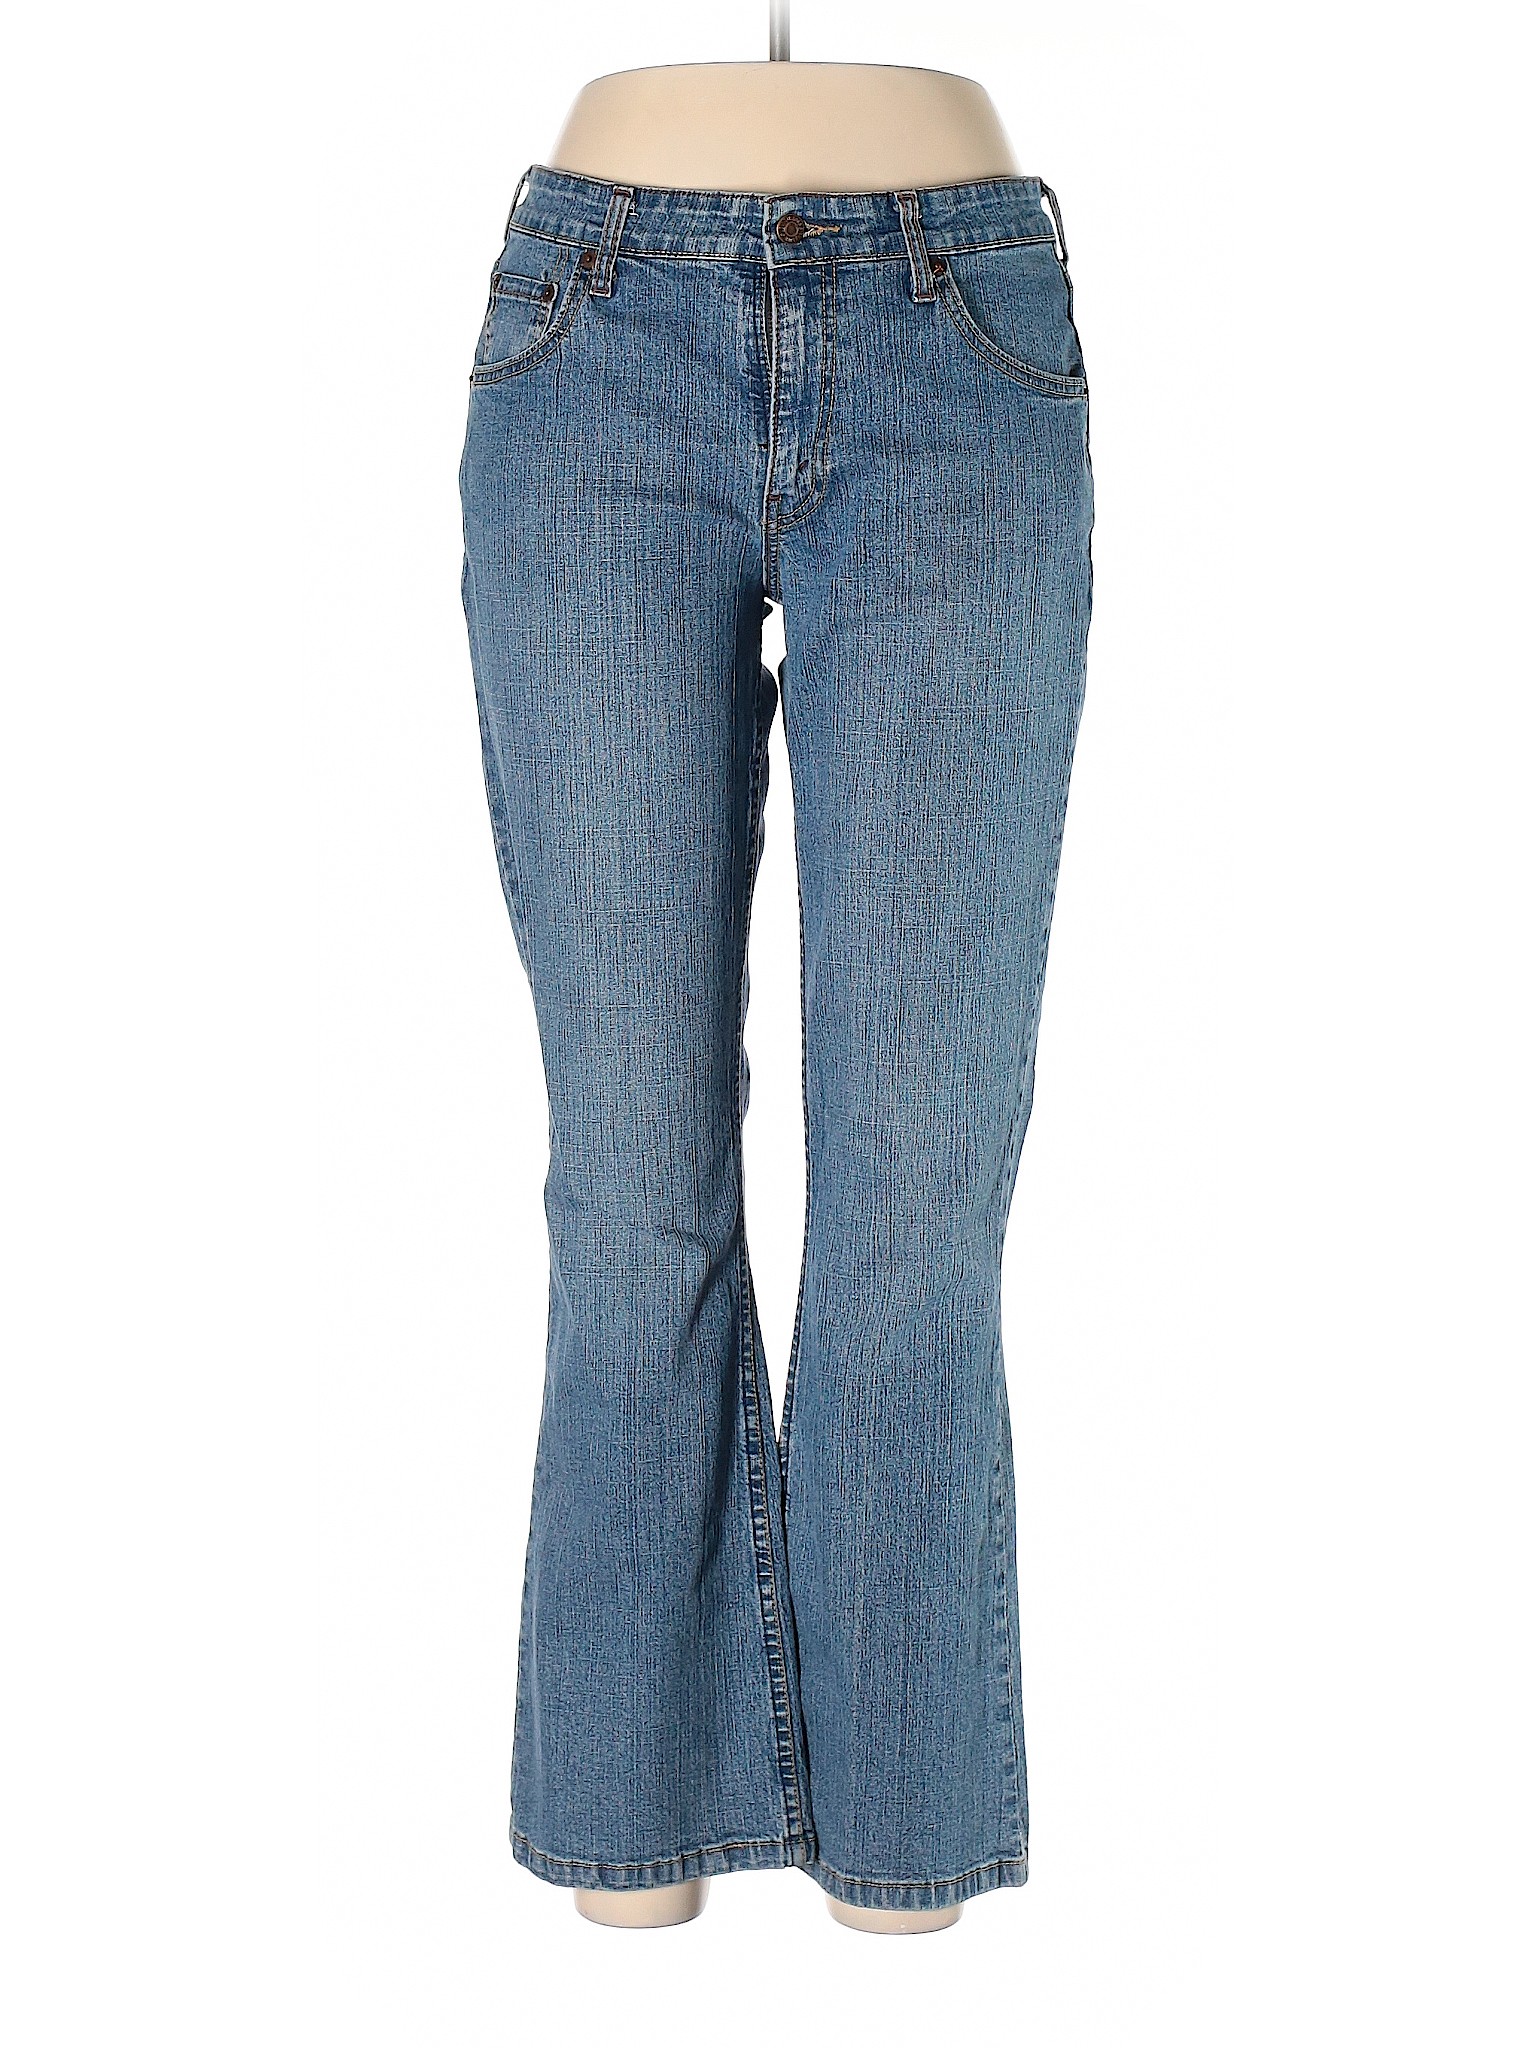 Levi Strauss Signature Women Blue Jeans 12 Petites | eBay